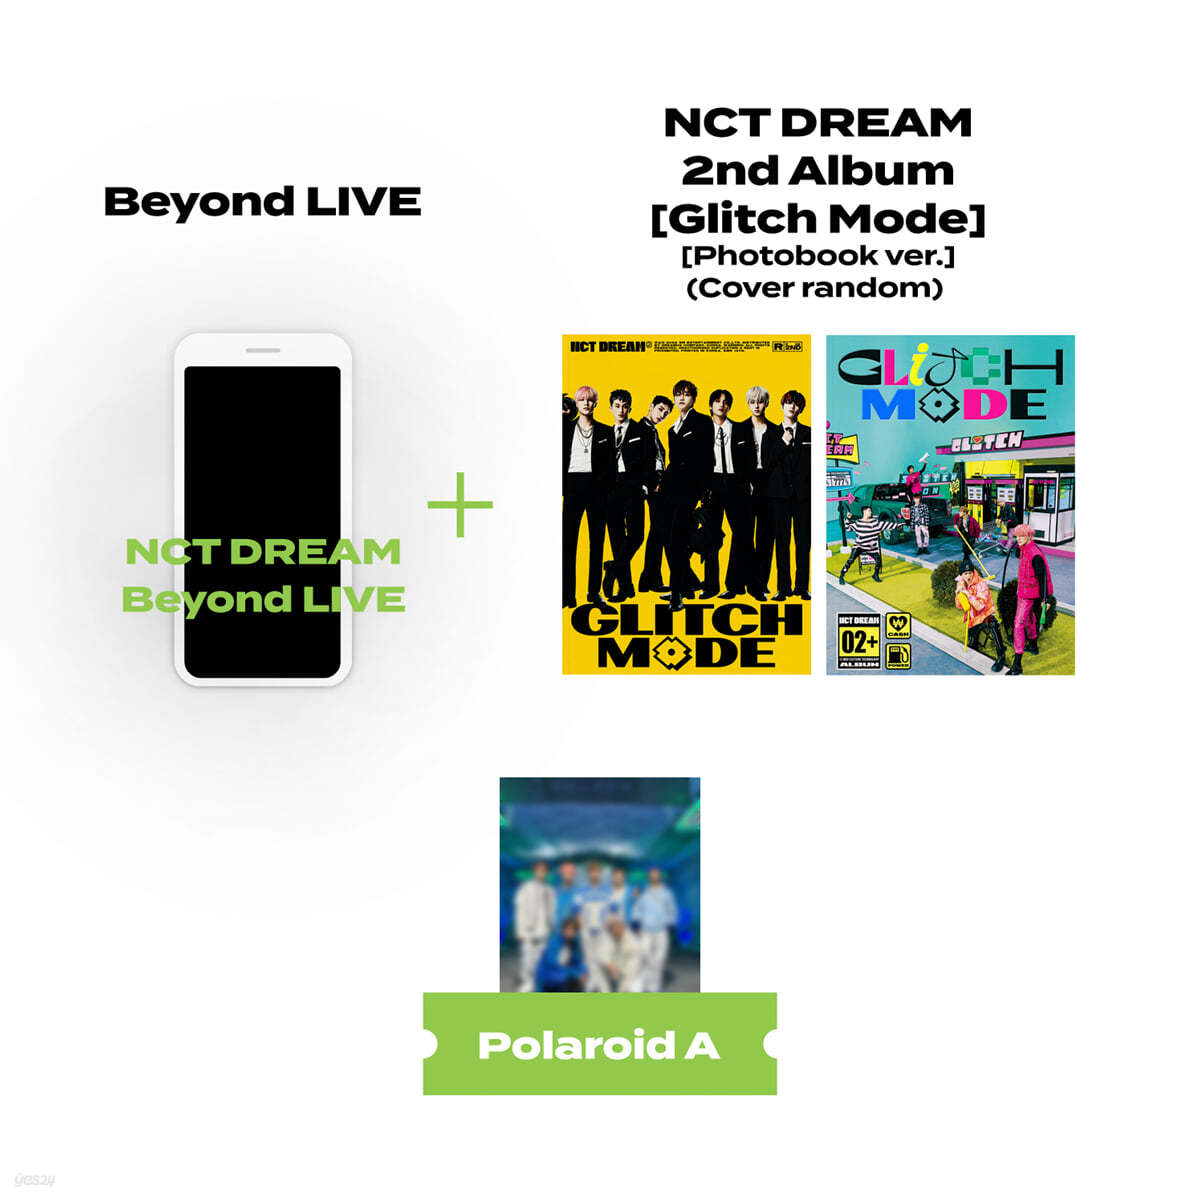 Beyond LIVE 관람권 + 엔시티 드림 (NCT DREAM) 2집 - Glitch Mode [Photobook ver.]